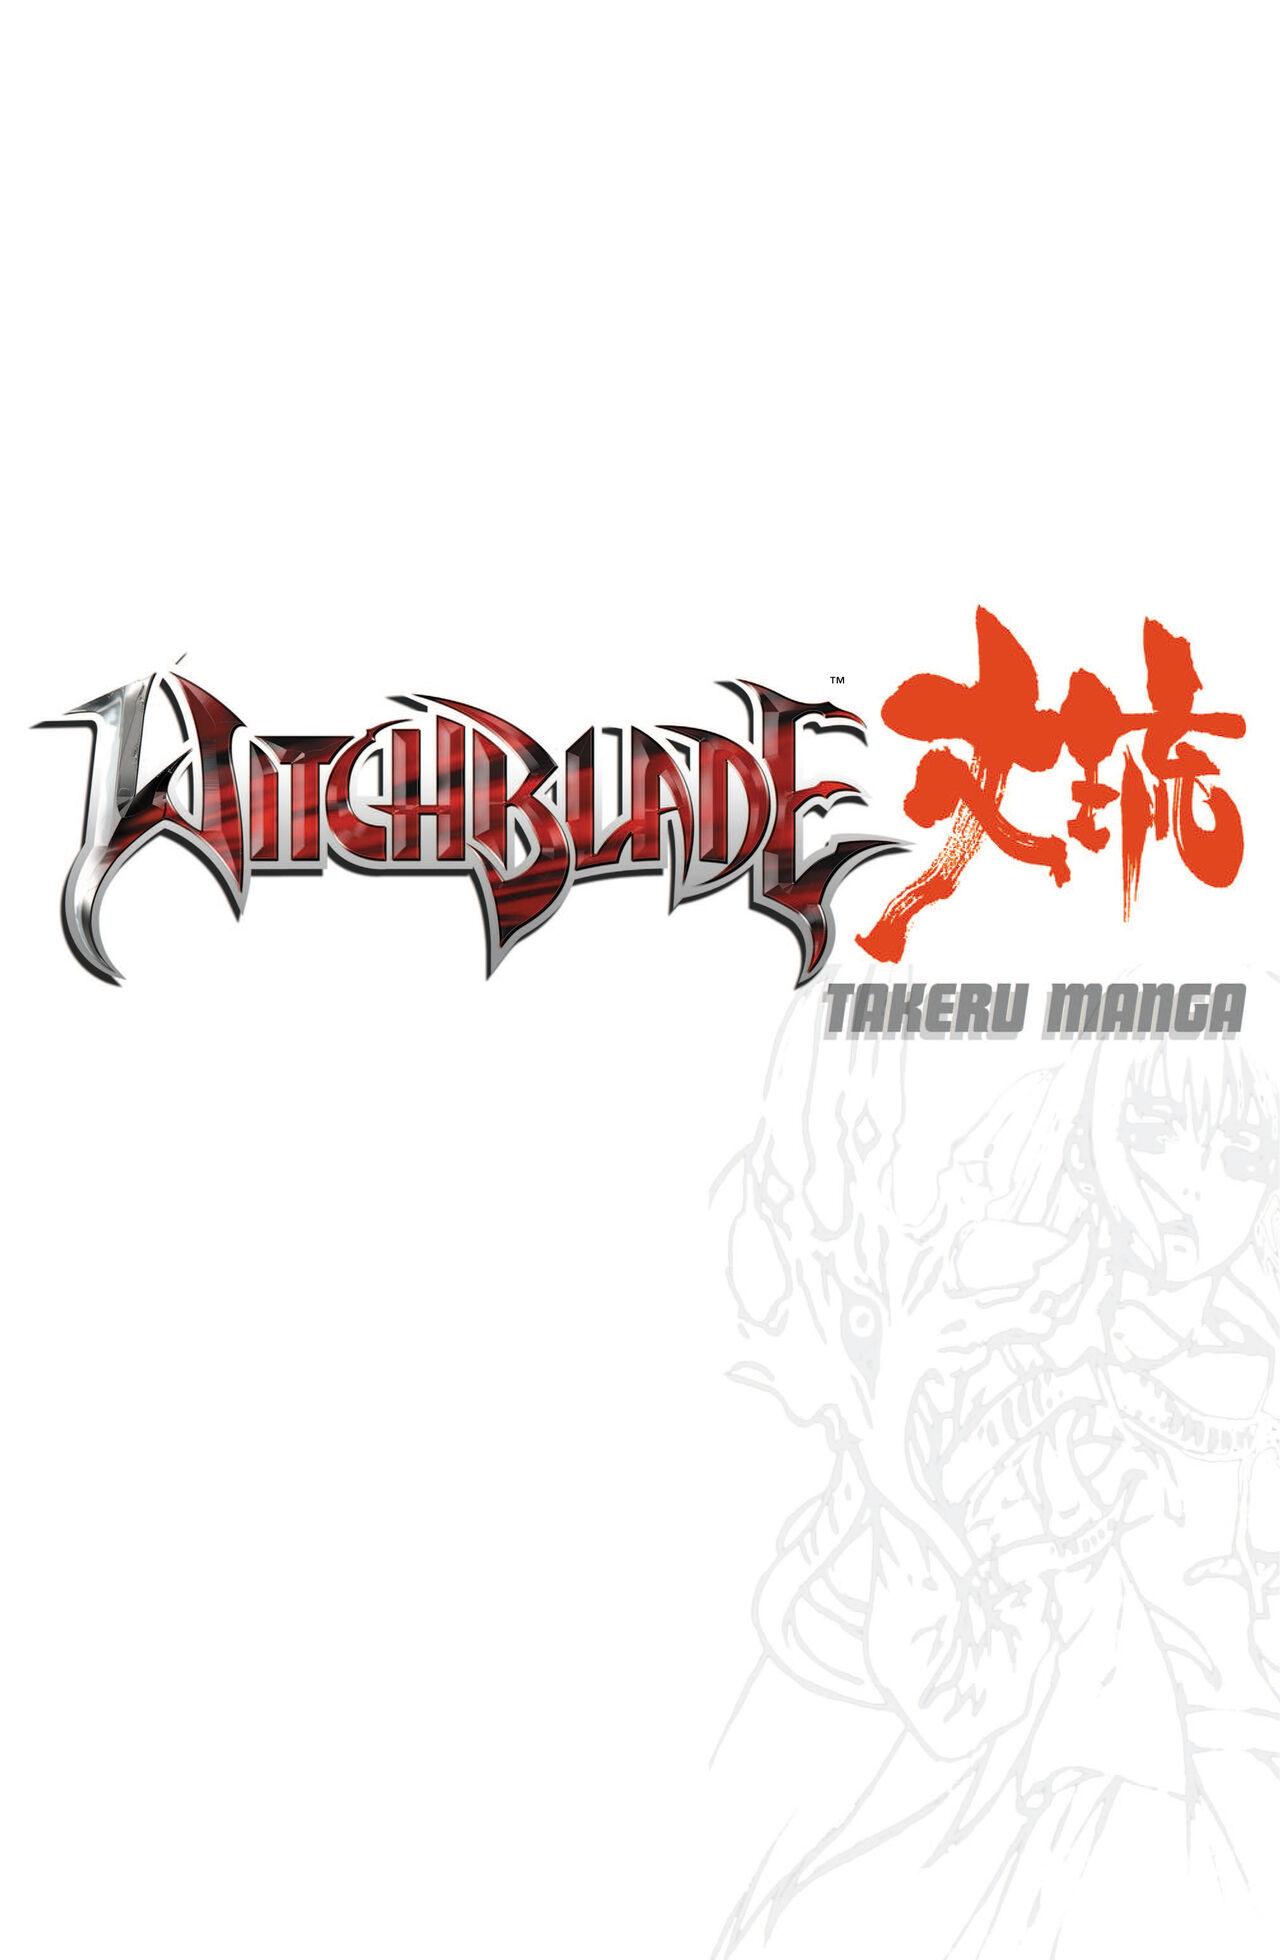 Newbie Witchblade: Takeru Manga - Witchblade Supernatural Para - Picture 2